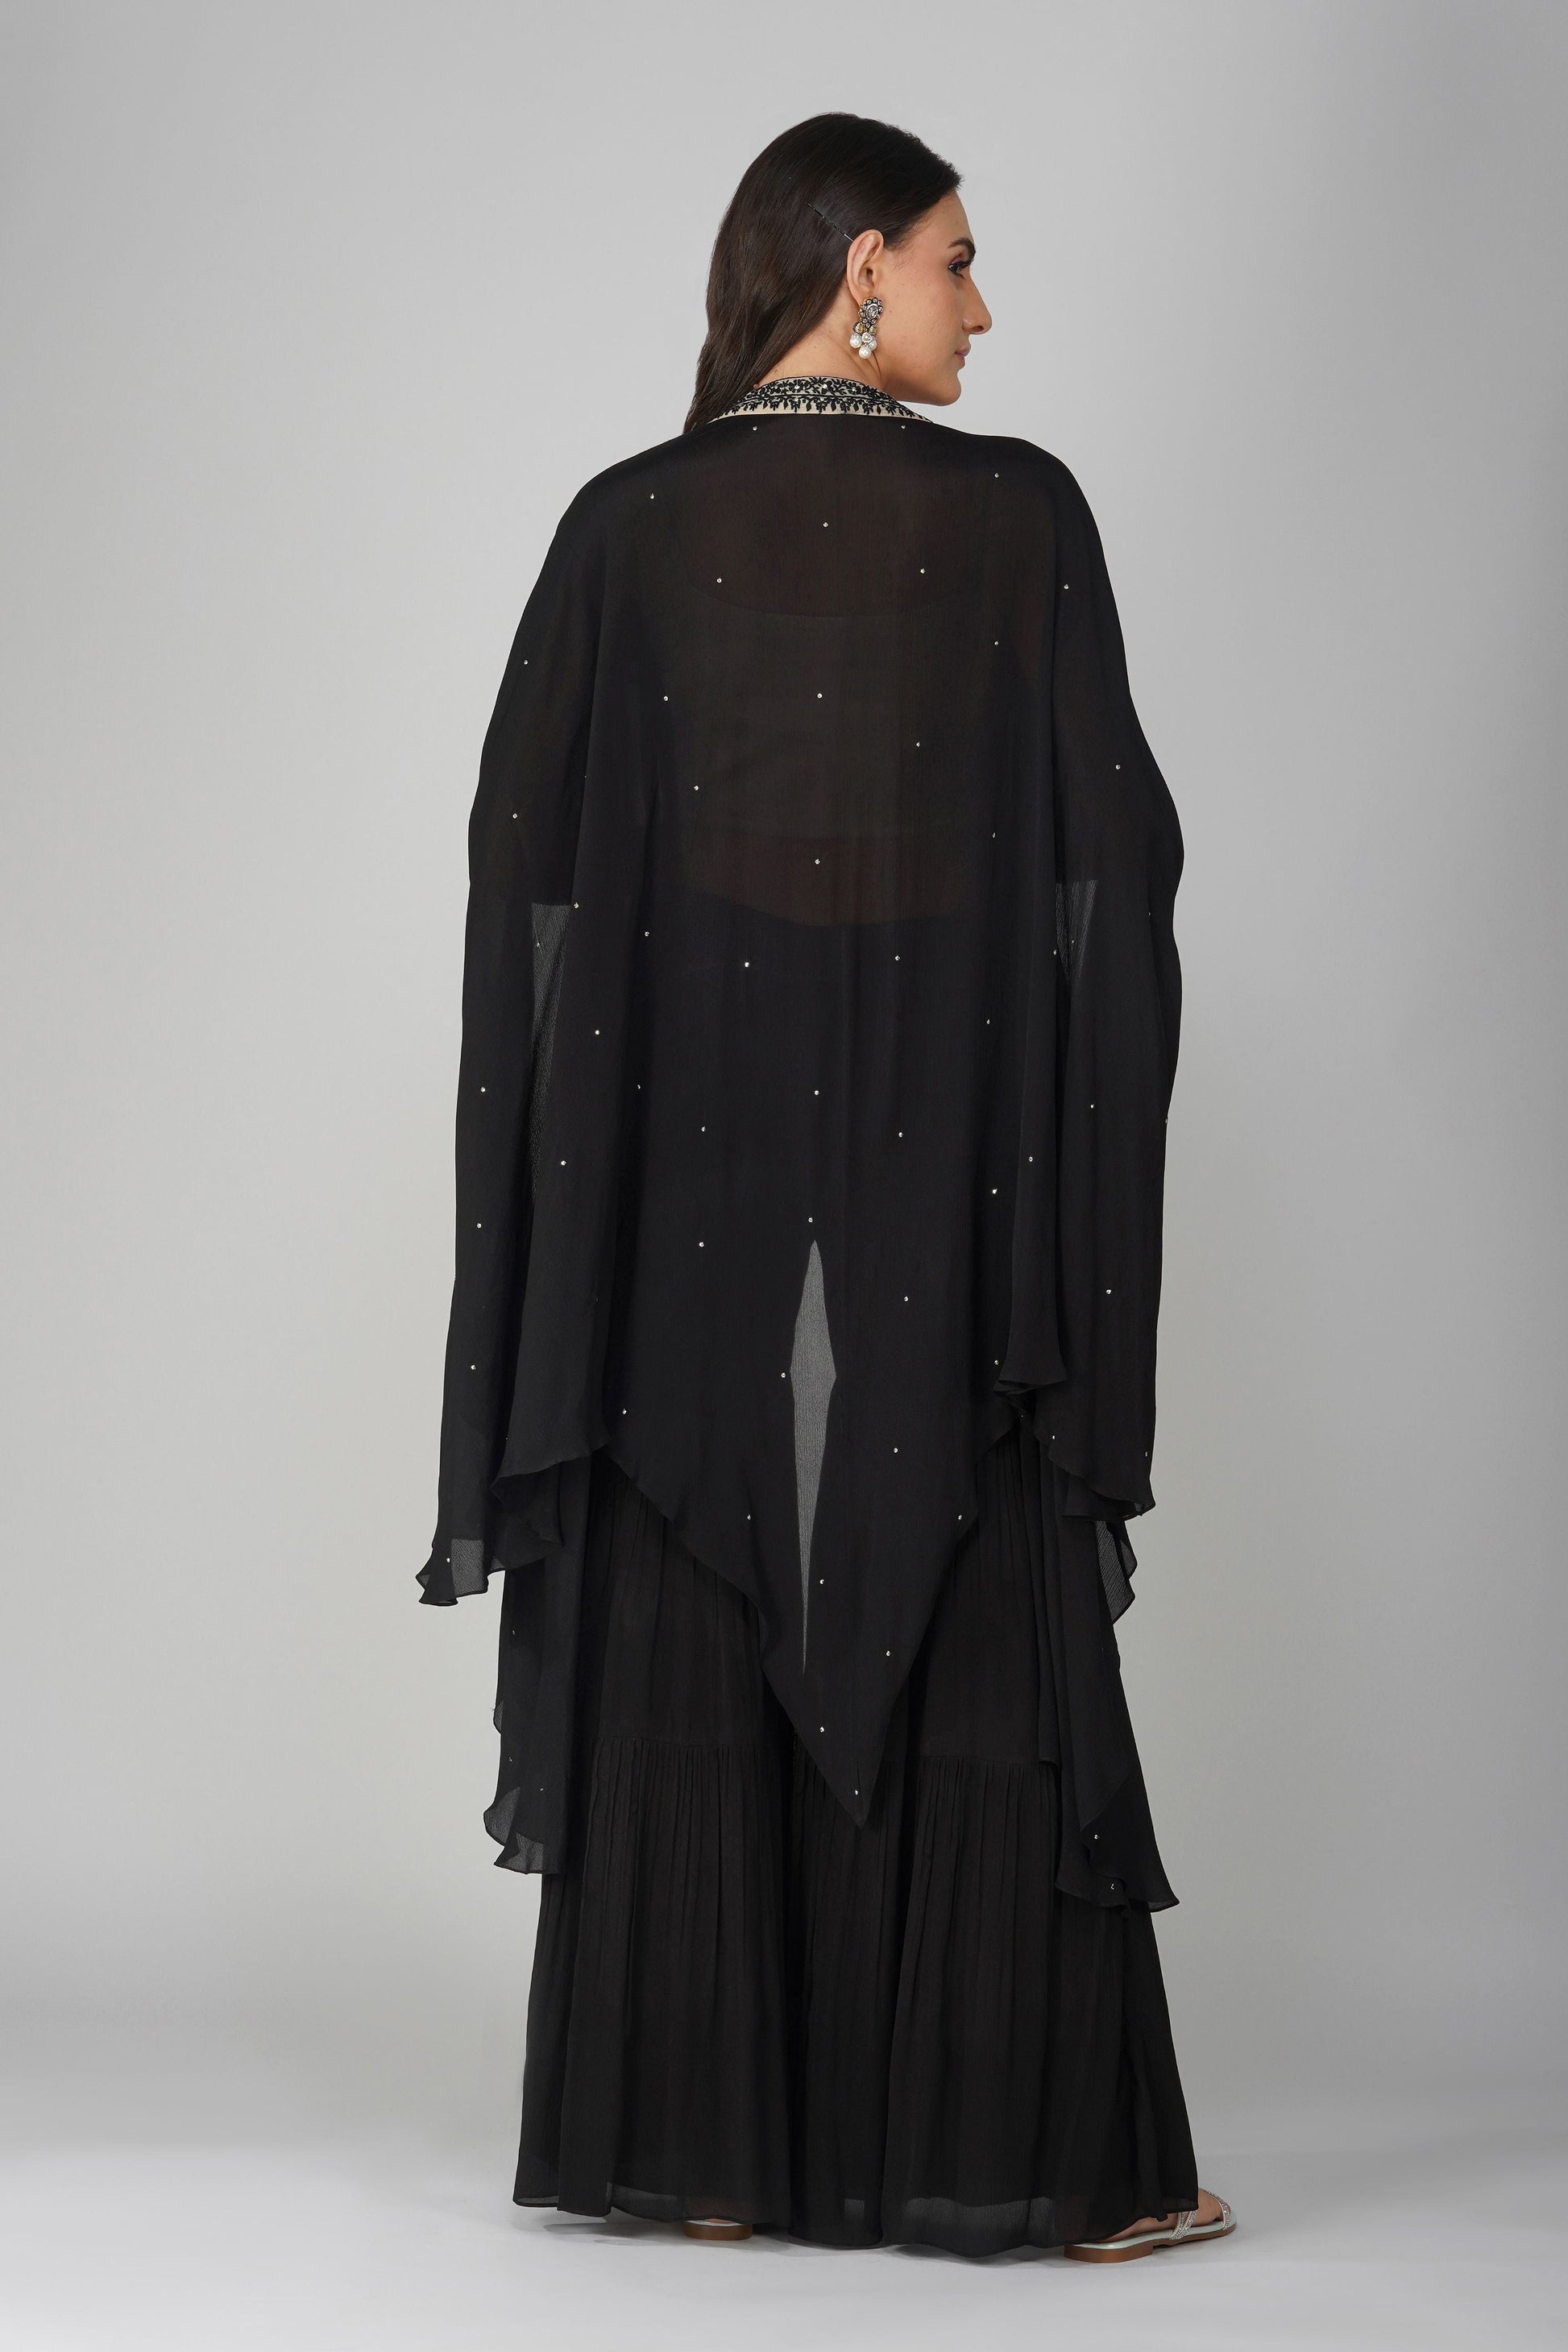 Black Chiffon Cape And Garara Set at Kamakhyaa by Devyani Mehrotra. This item is Black, Chiffon, Embellished, Indian Wear, Natural, Party Wear, Regular Fit, Womenswear